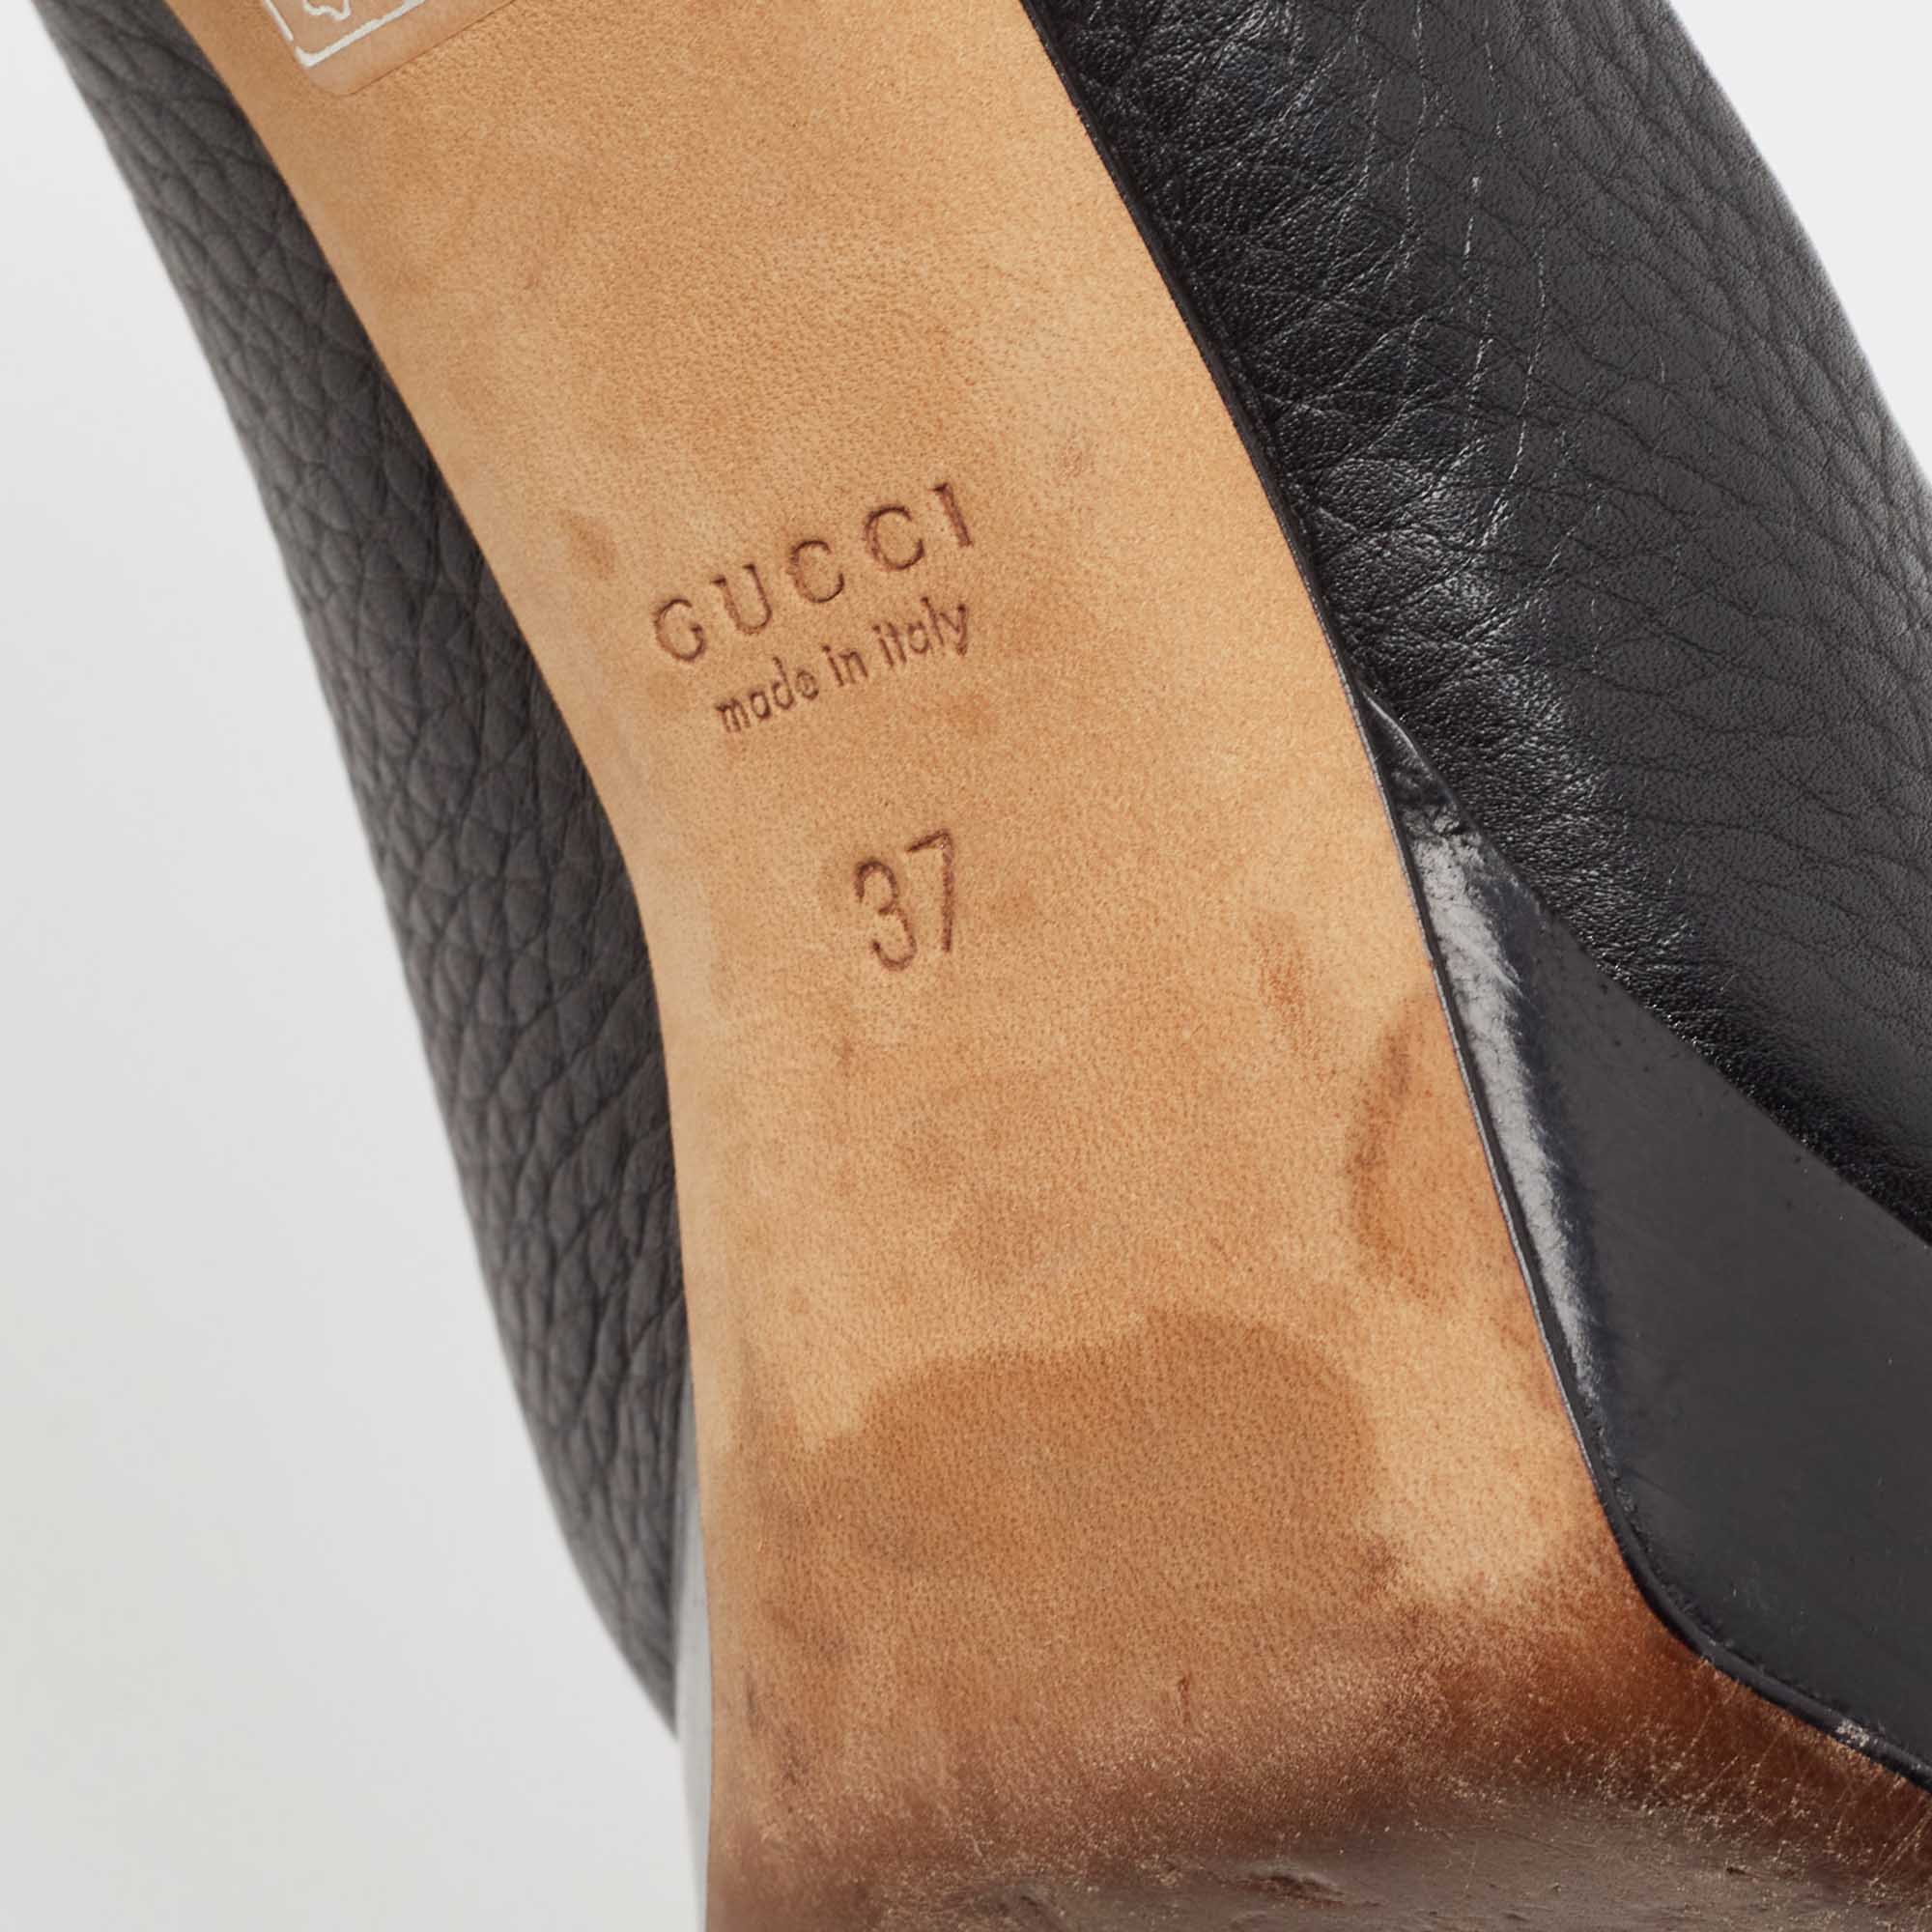 Gucci Black Leather Peep Toe Pumps Size 37